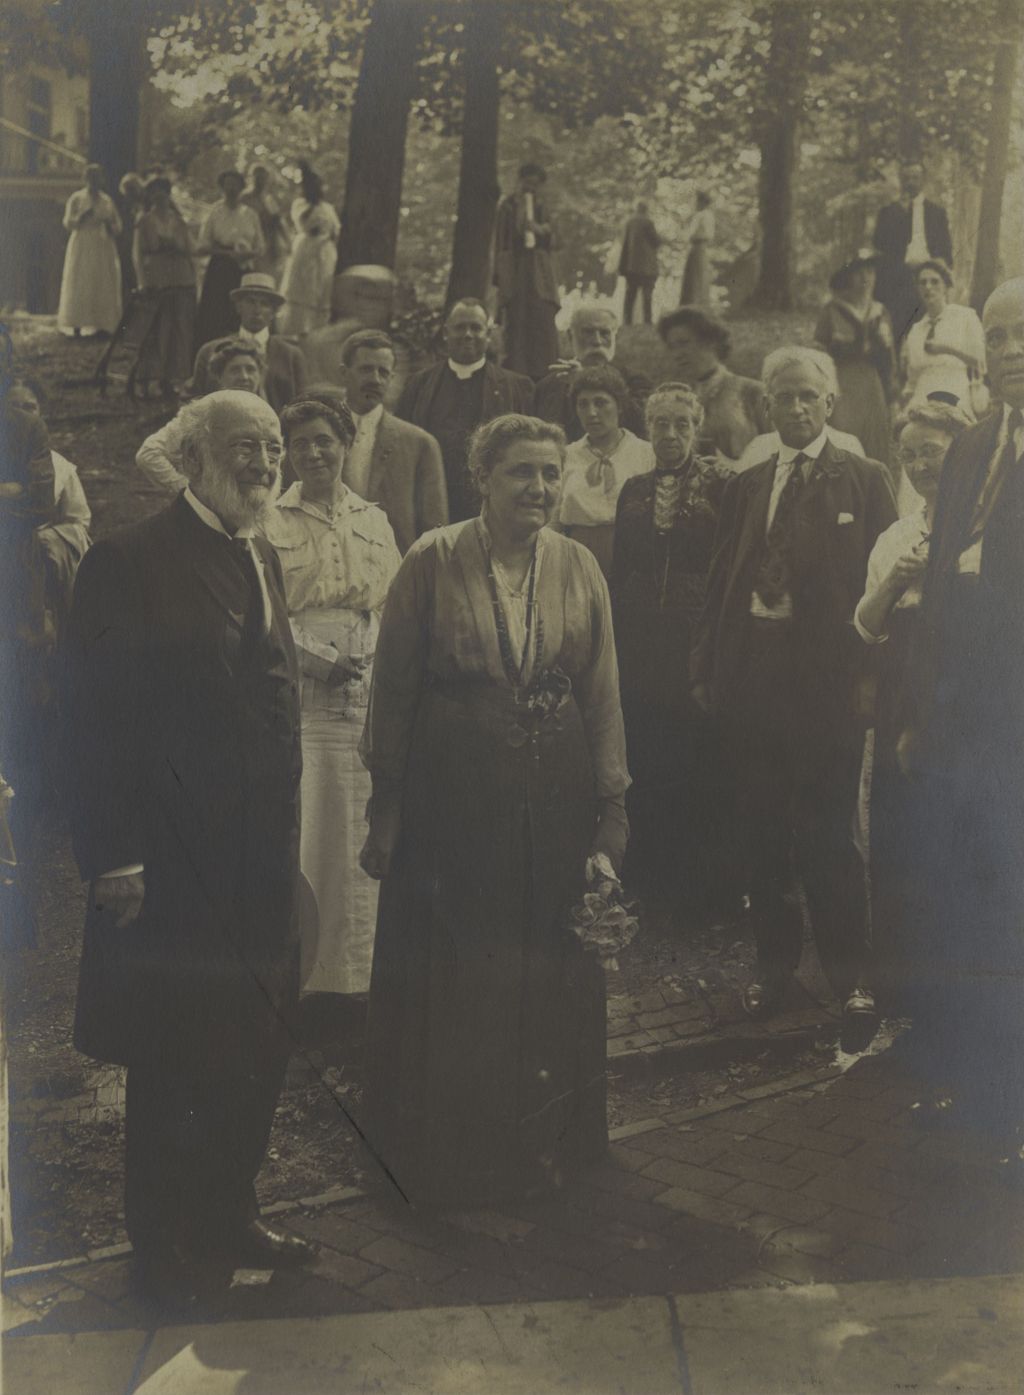 Jane Addams and Bishop John Vincent at Chautauqua